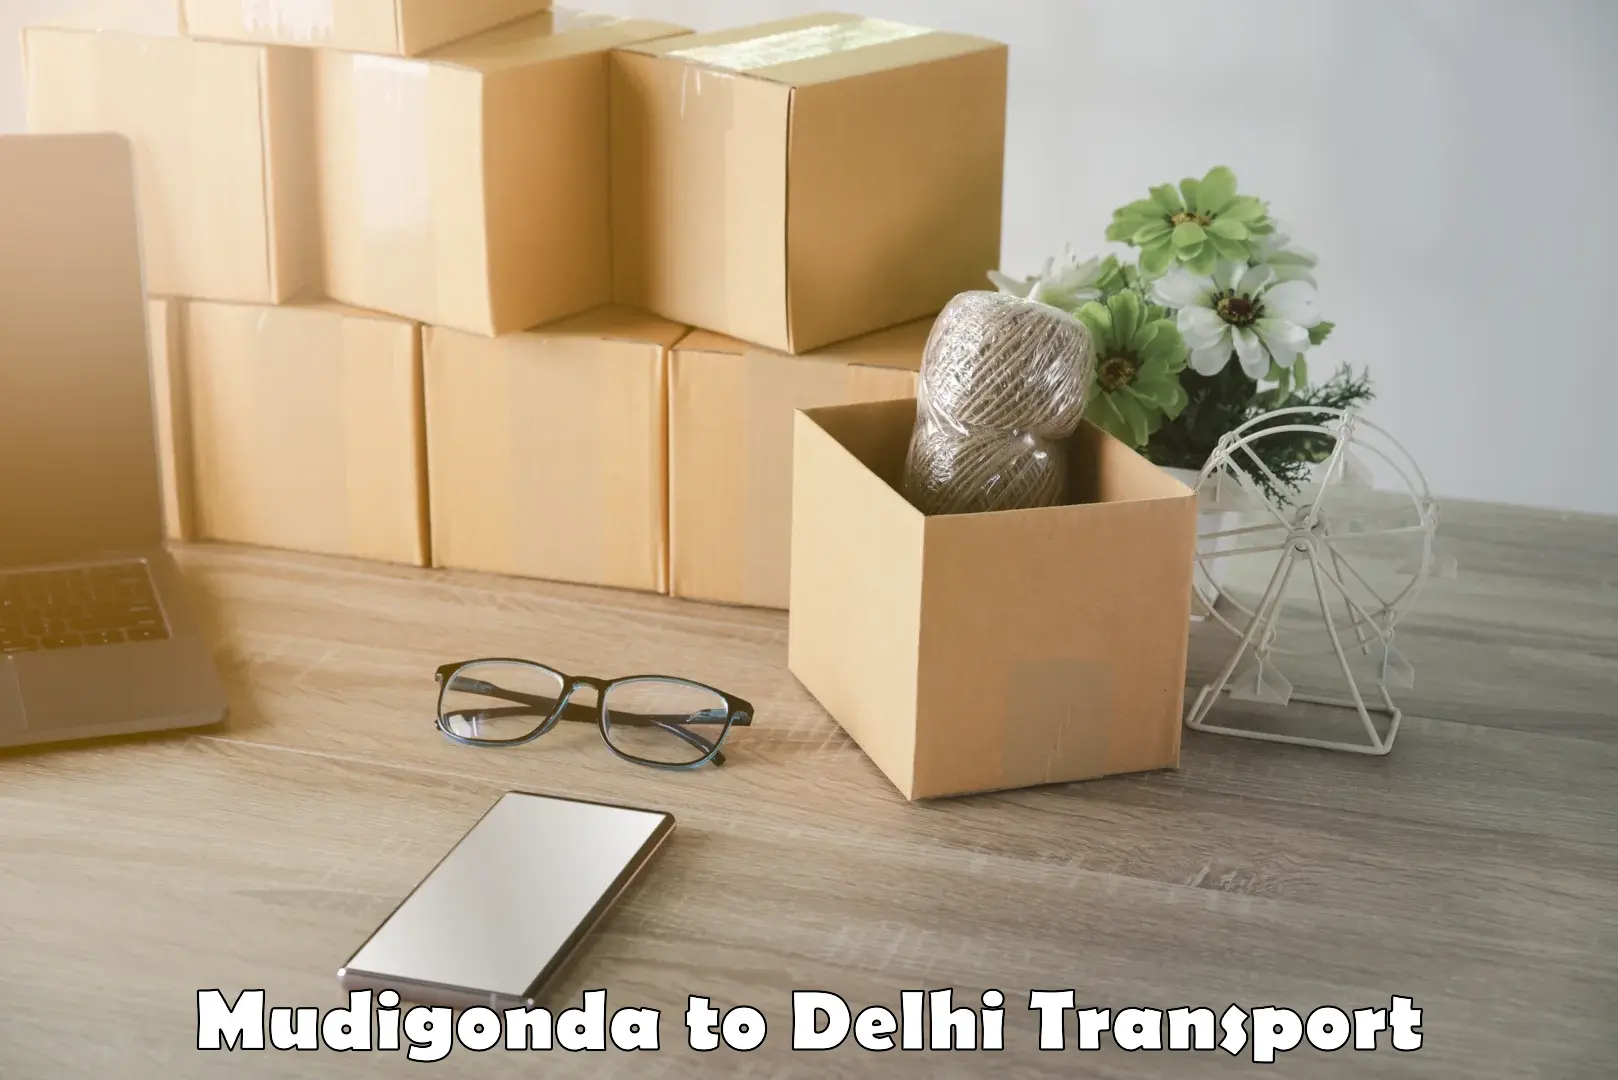 Transport bike from one state to another Mudigonda to Delhi